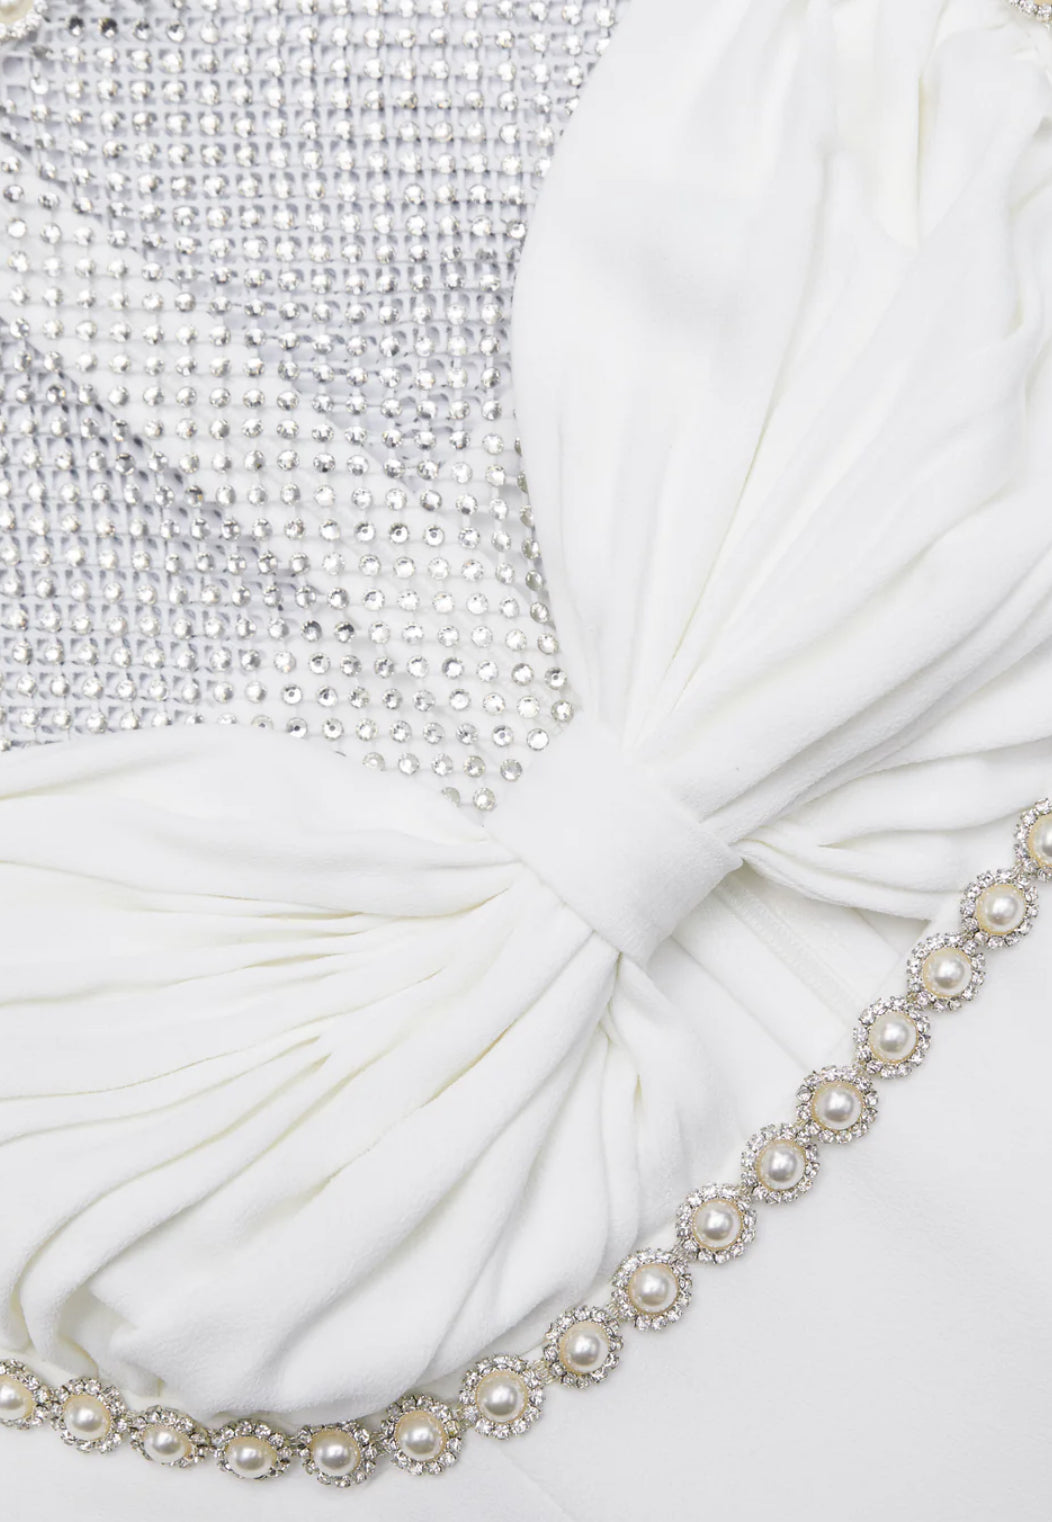 Self-Portrait White Diamante Crepe Midi Dress BNWT UK 4